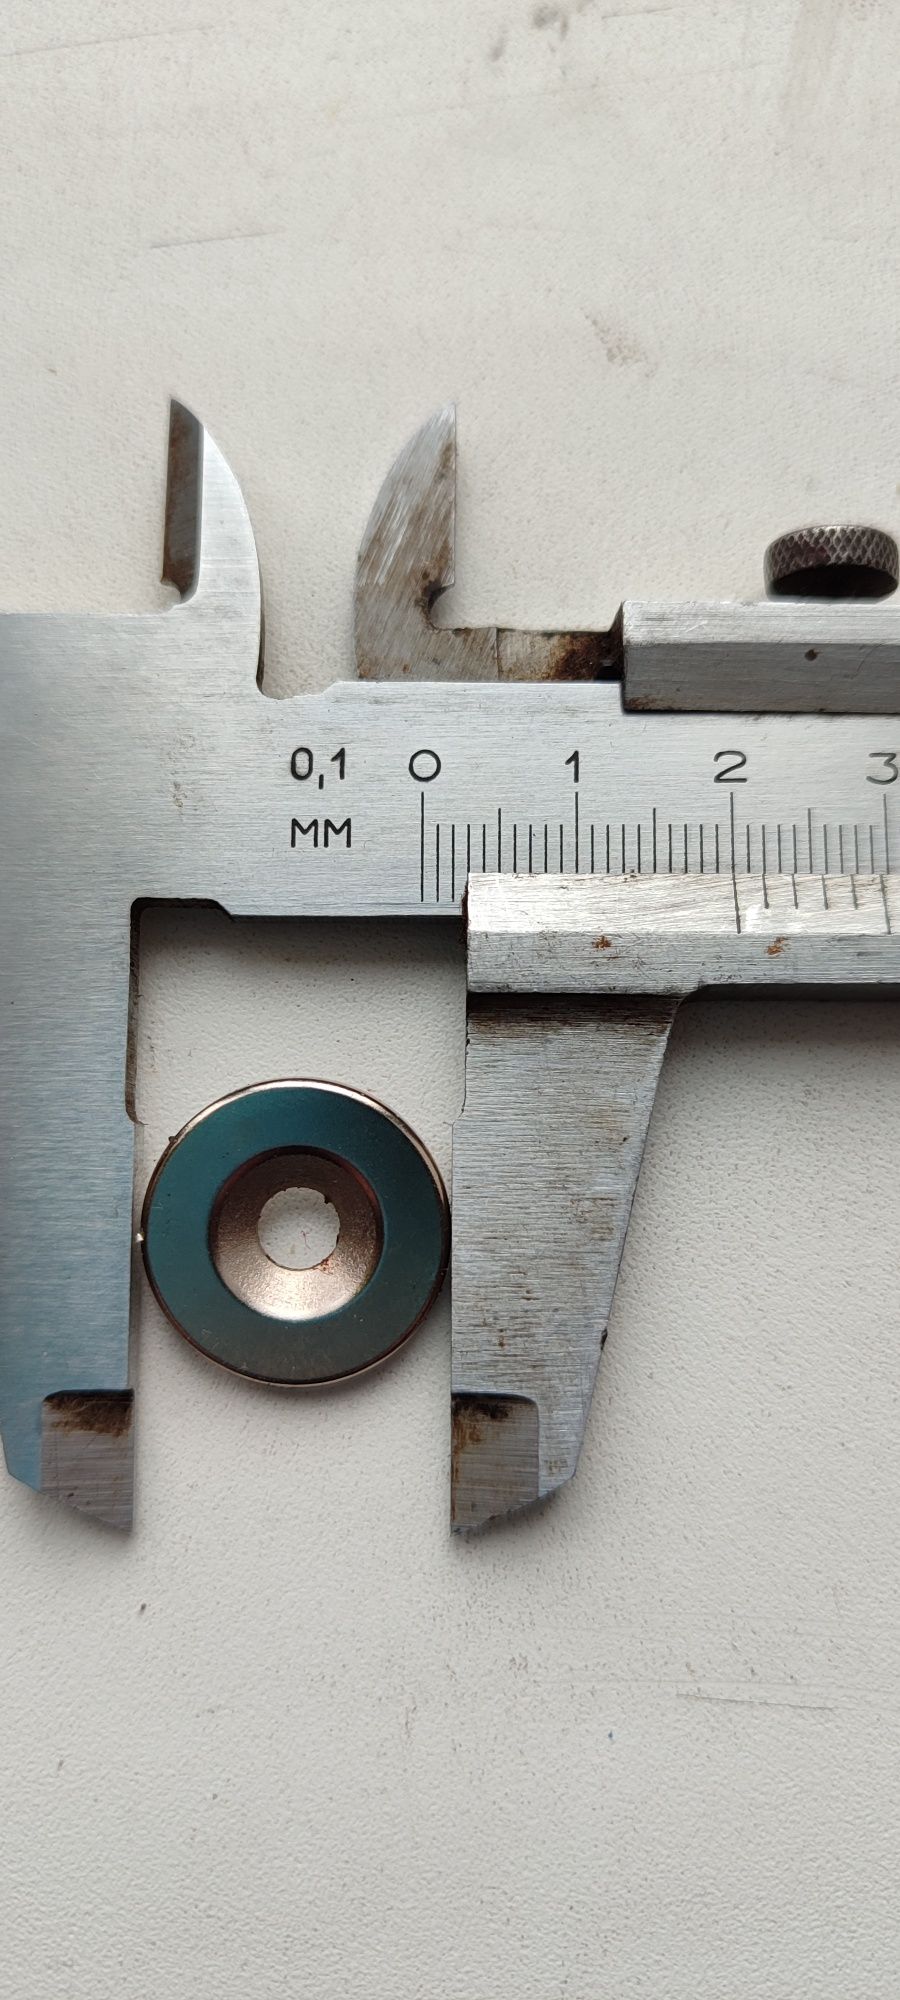 Неодимовый магнит с зенковкой D20 х h3 мм, диск (сила ~ 3 кг)